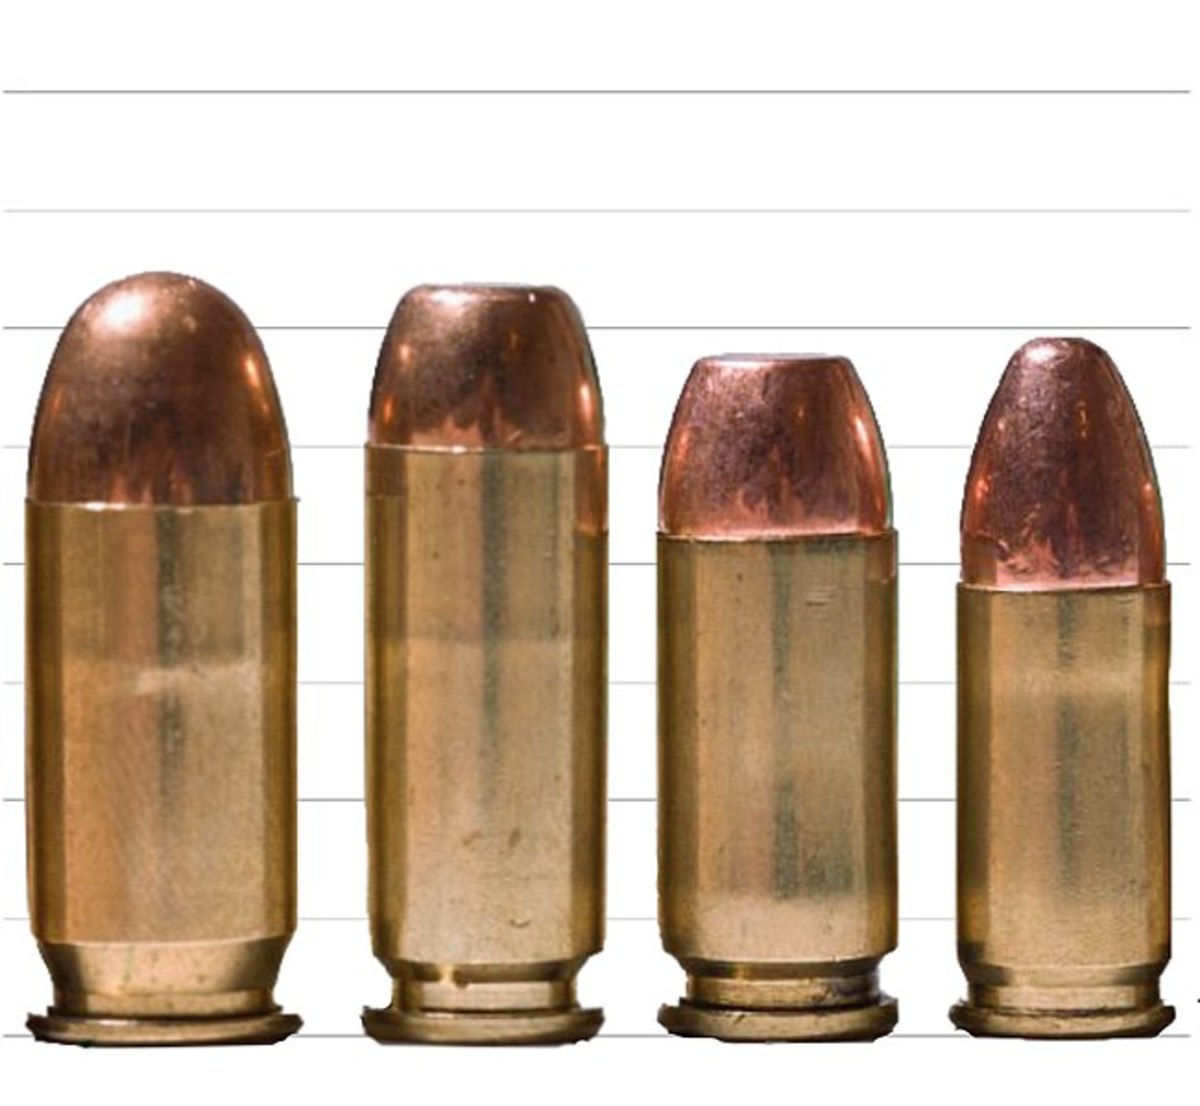 Defensive Handgun Cartridges Are All The Same Facts Vs Hype Skyaboveus